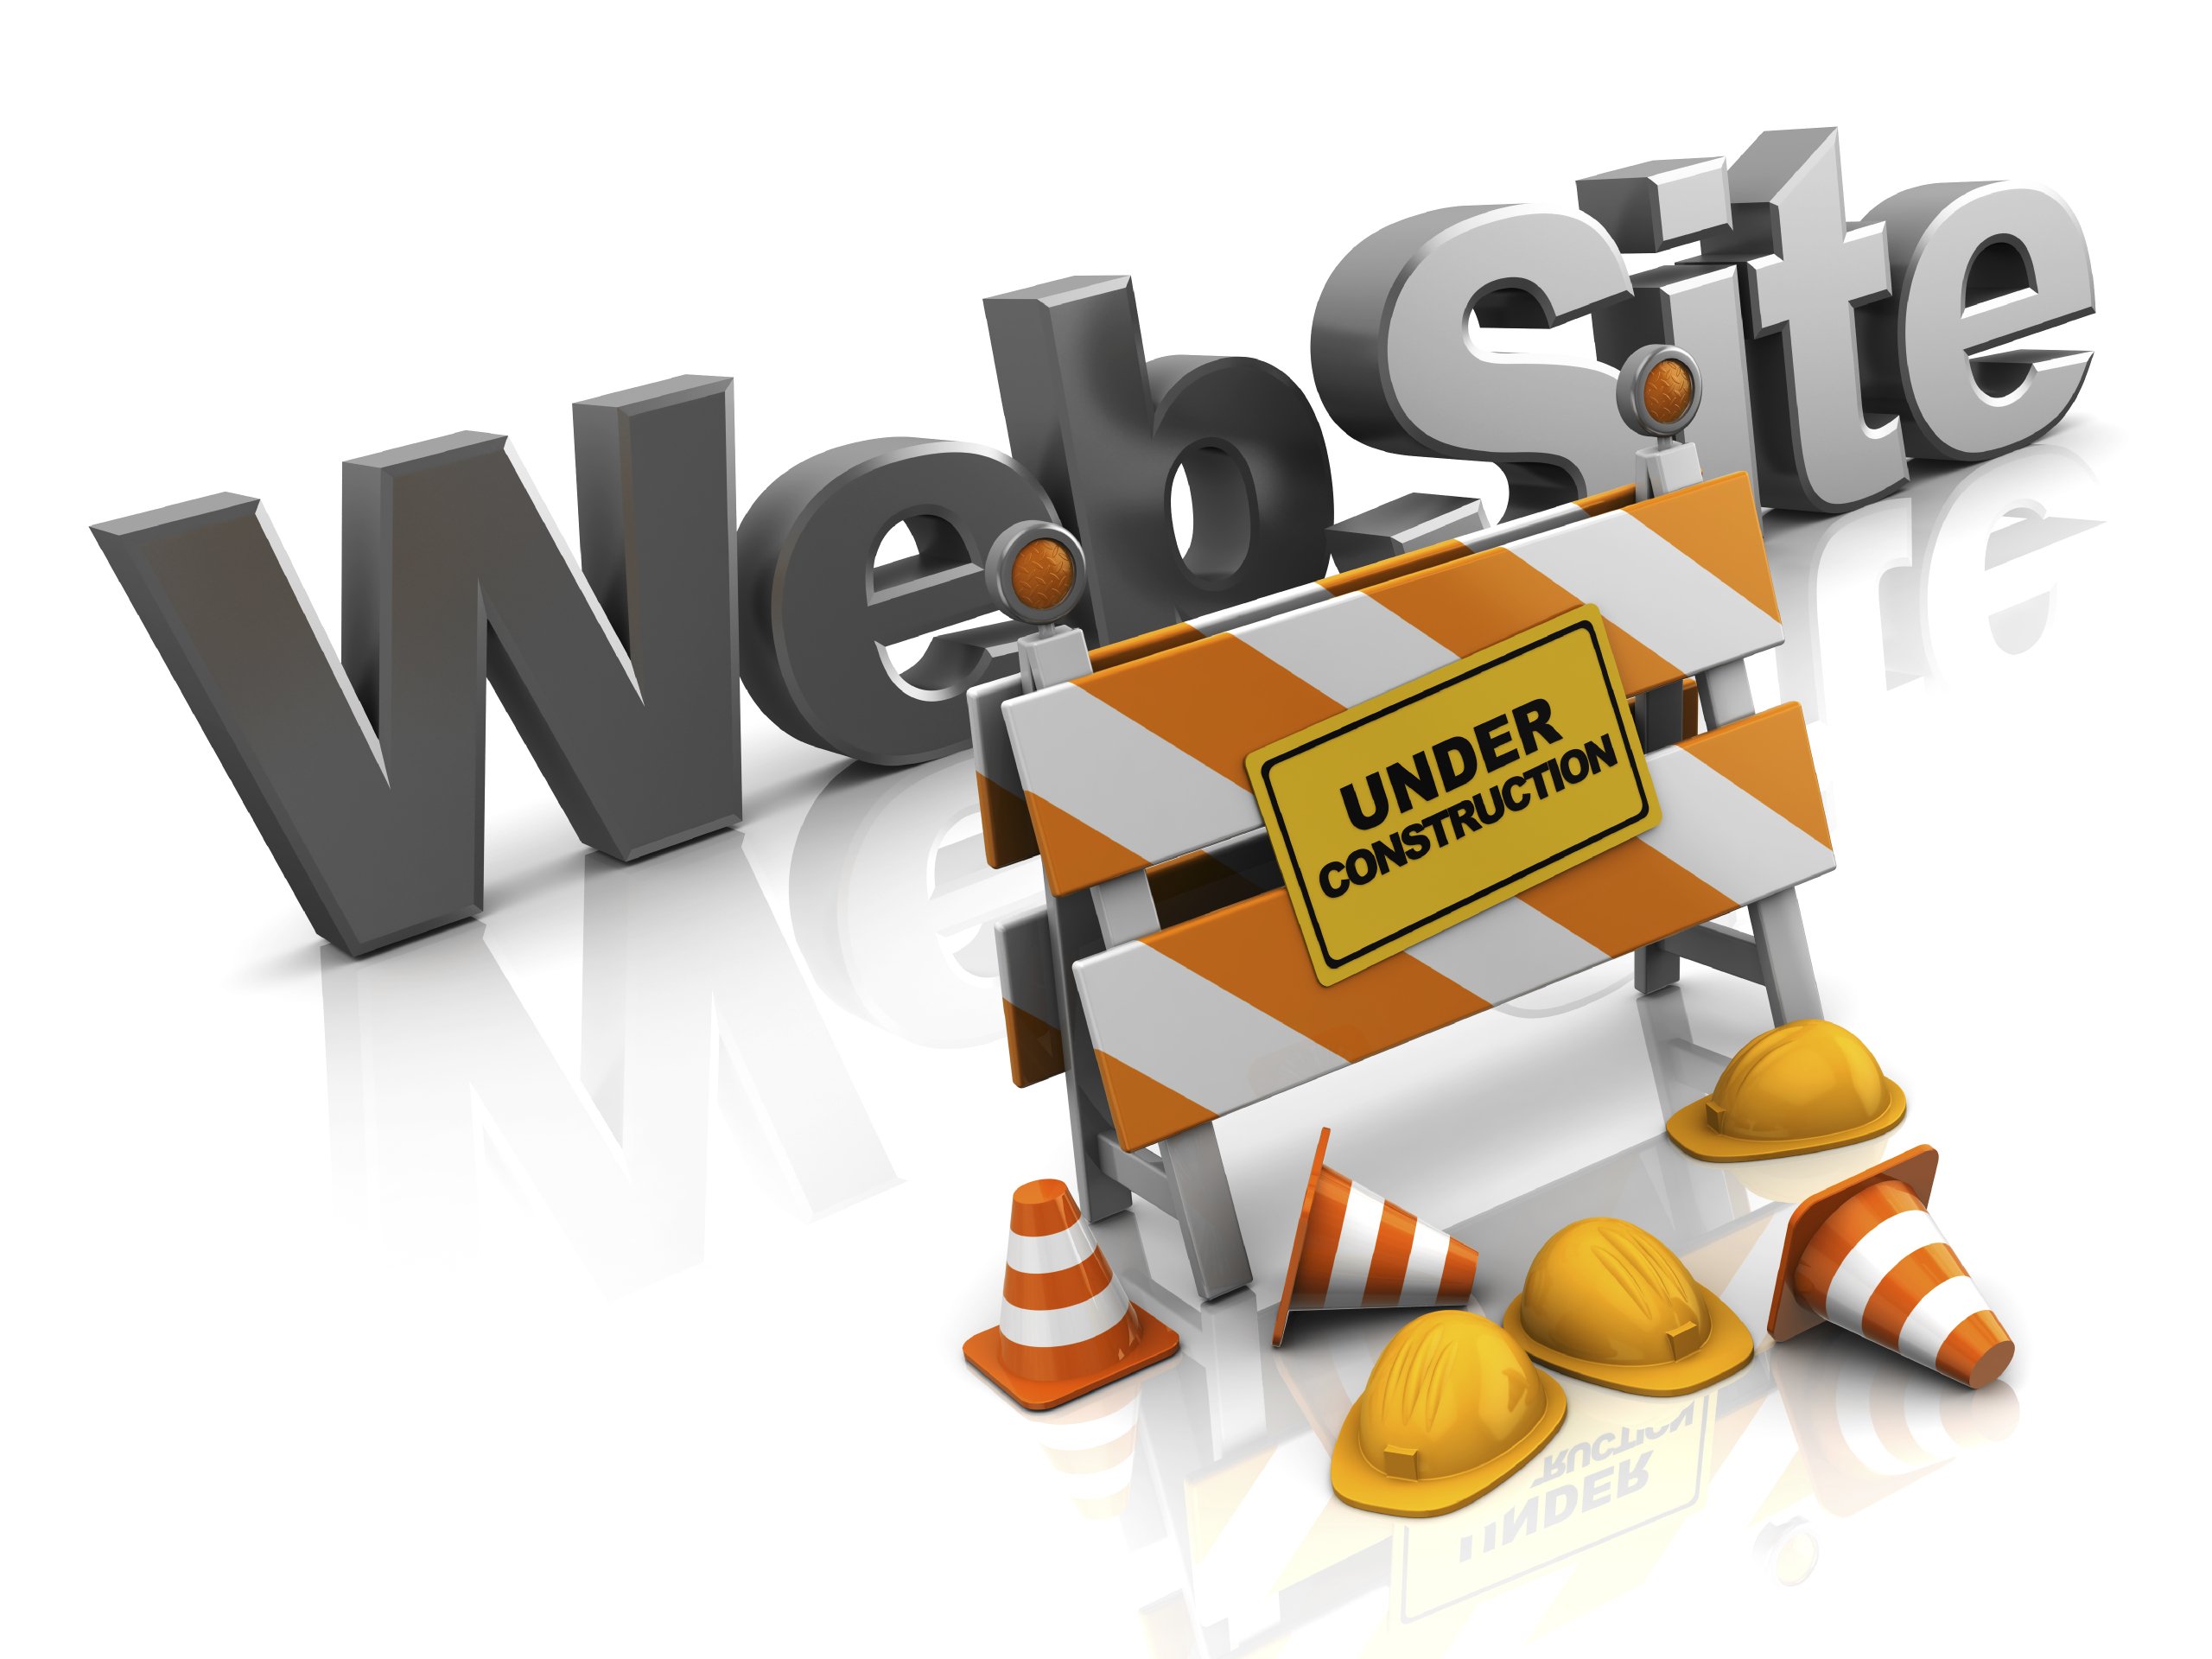 under, Construction, Sign, Work, Computer, Humor, Funny, Text, Maintenance, Wallpaper, Website, Web Wallpaper